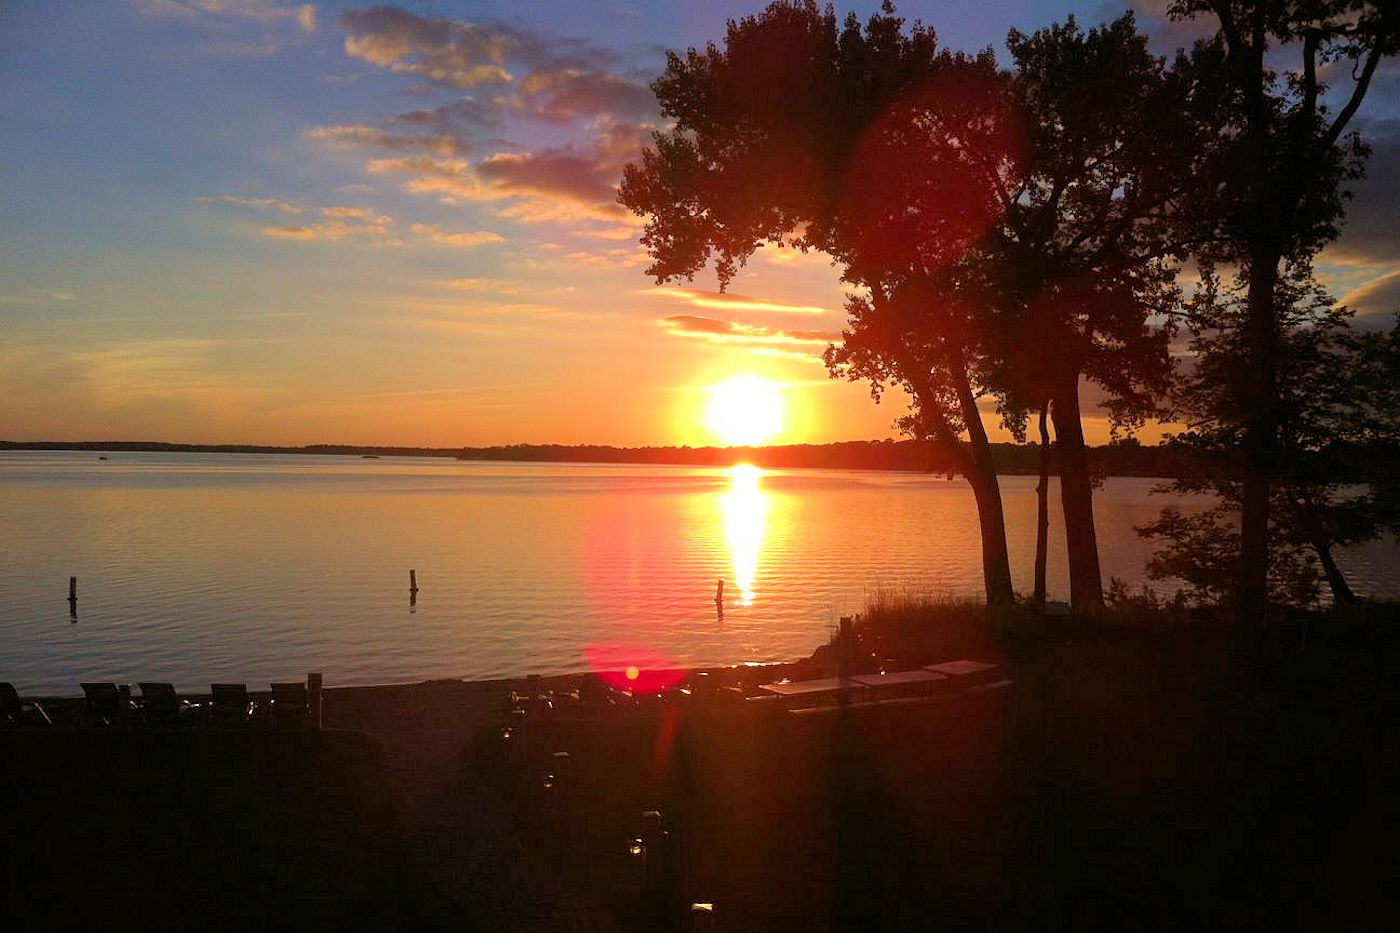 August 27, 2014 Big Detroit Lake Sunset at The Lodge on Lake Detroit